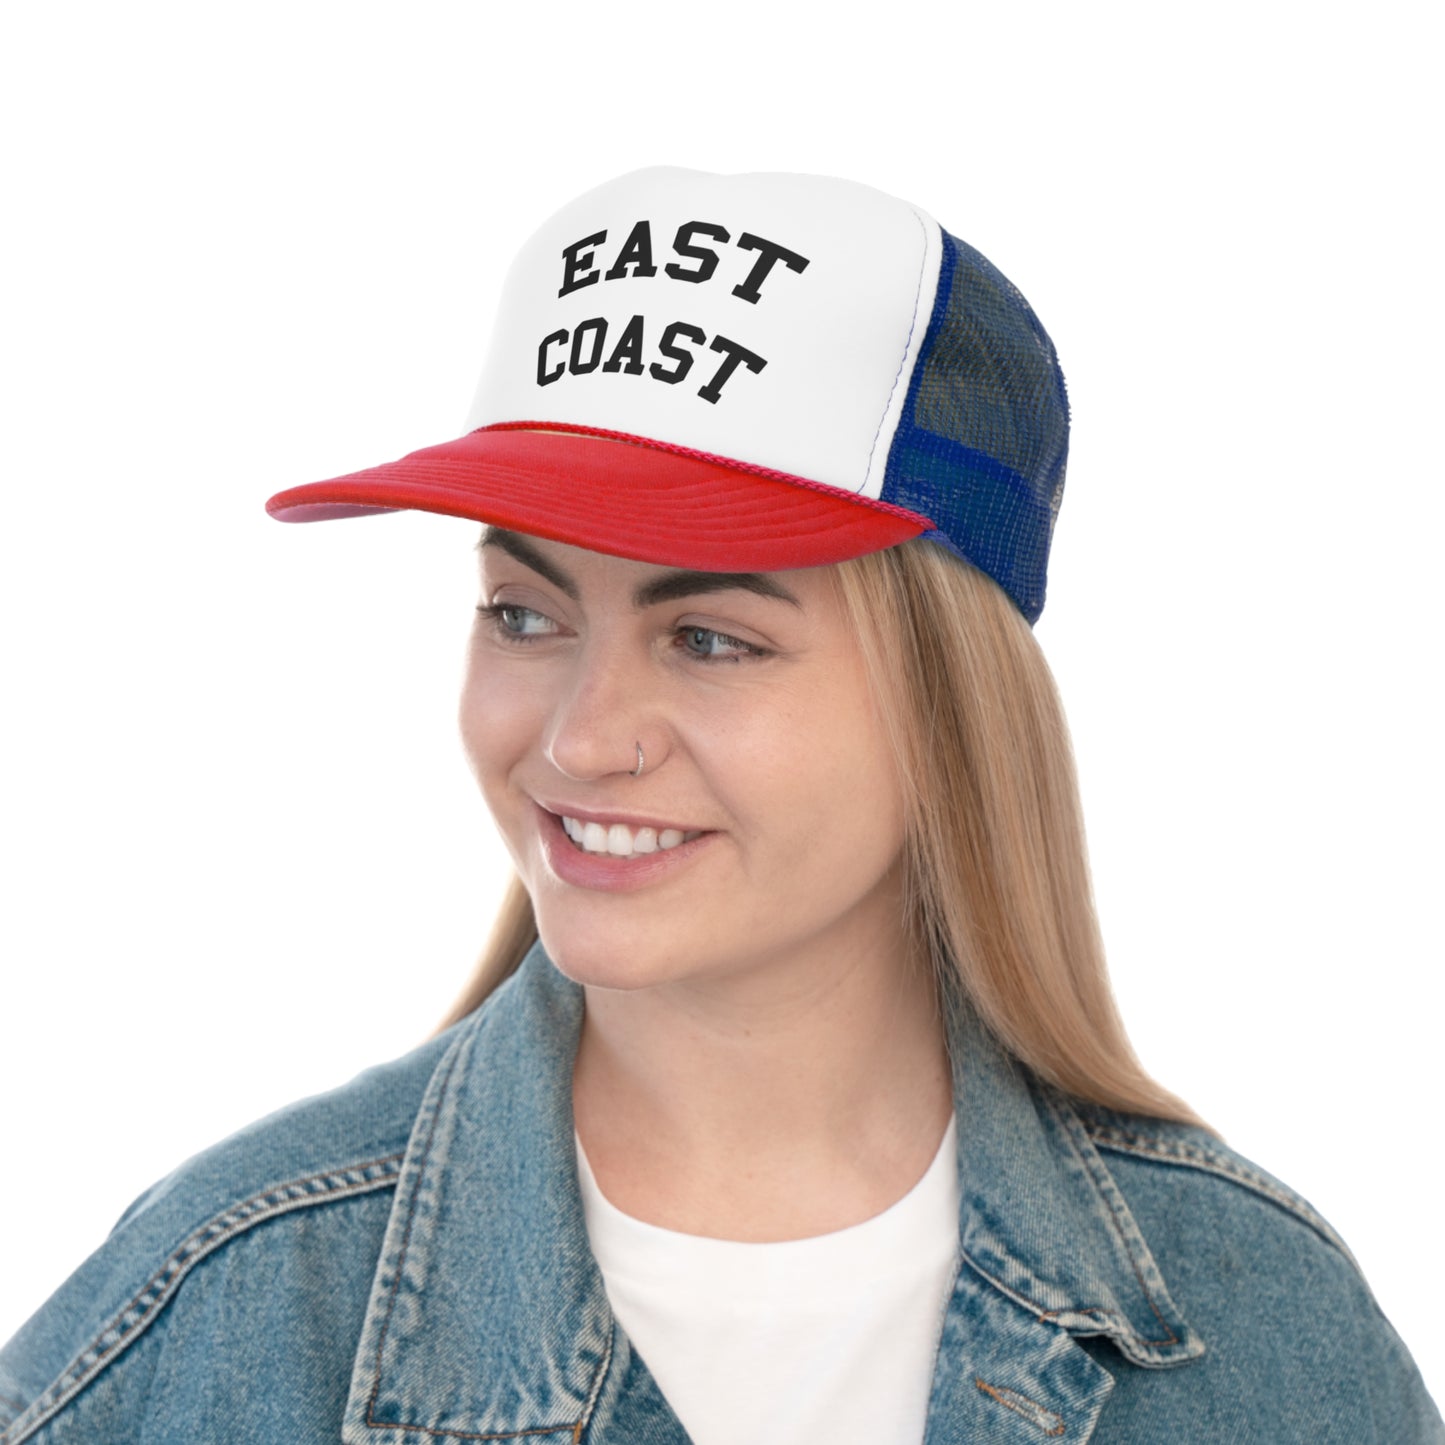 East Coast Snapback Trucker Hat